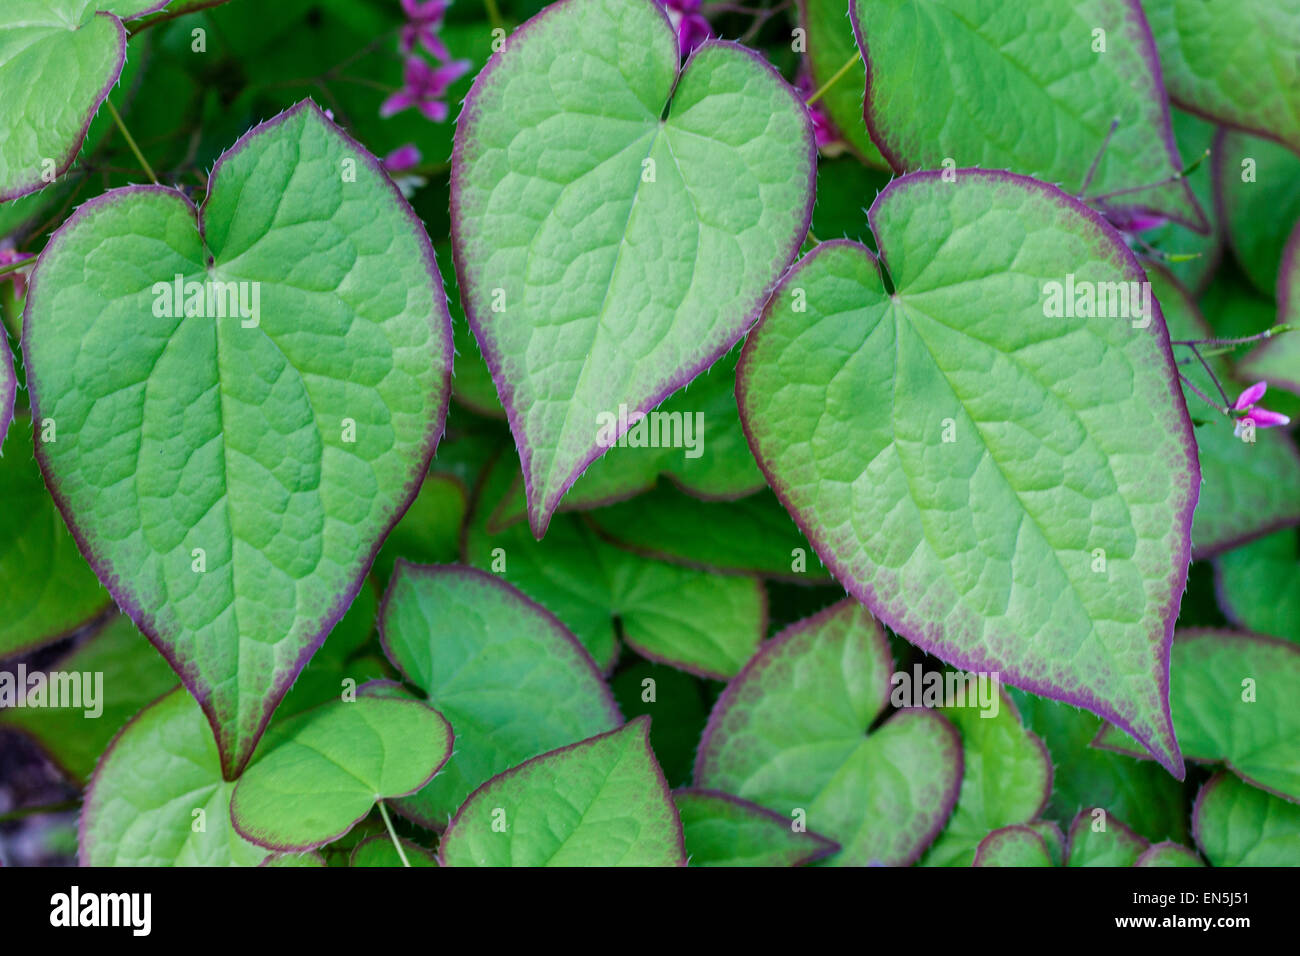 Epimedium leaves, Barrenwort leaves Stock Photo